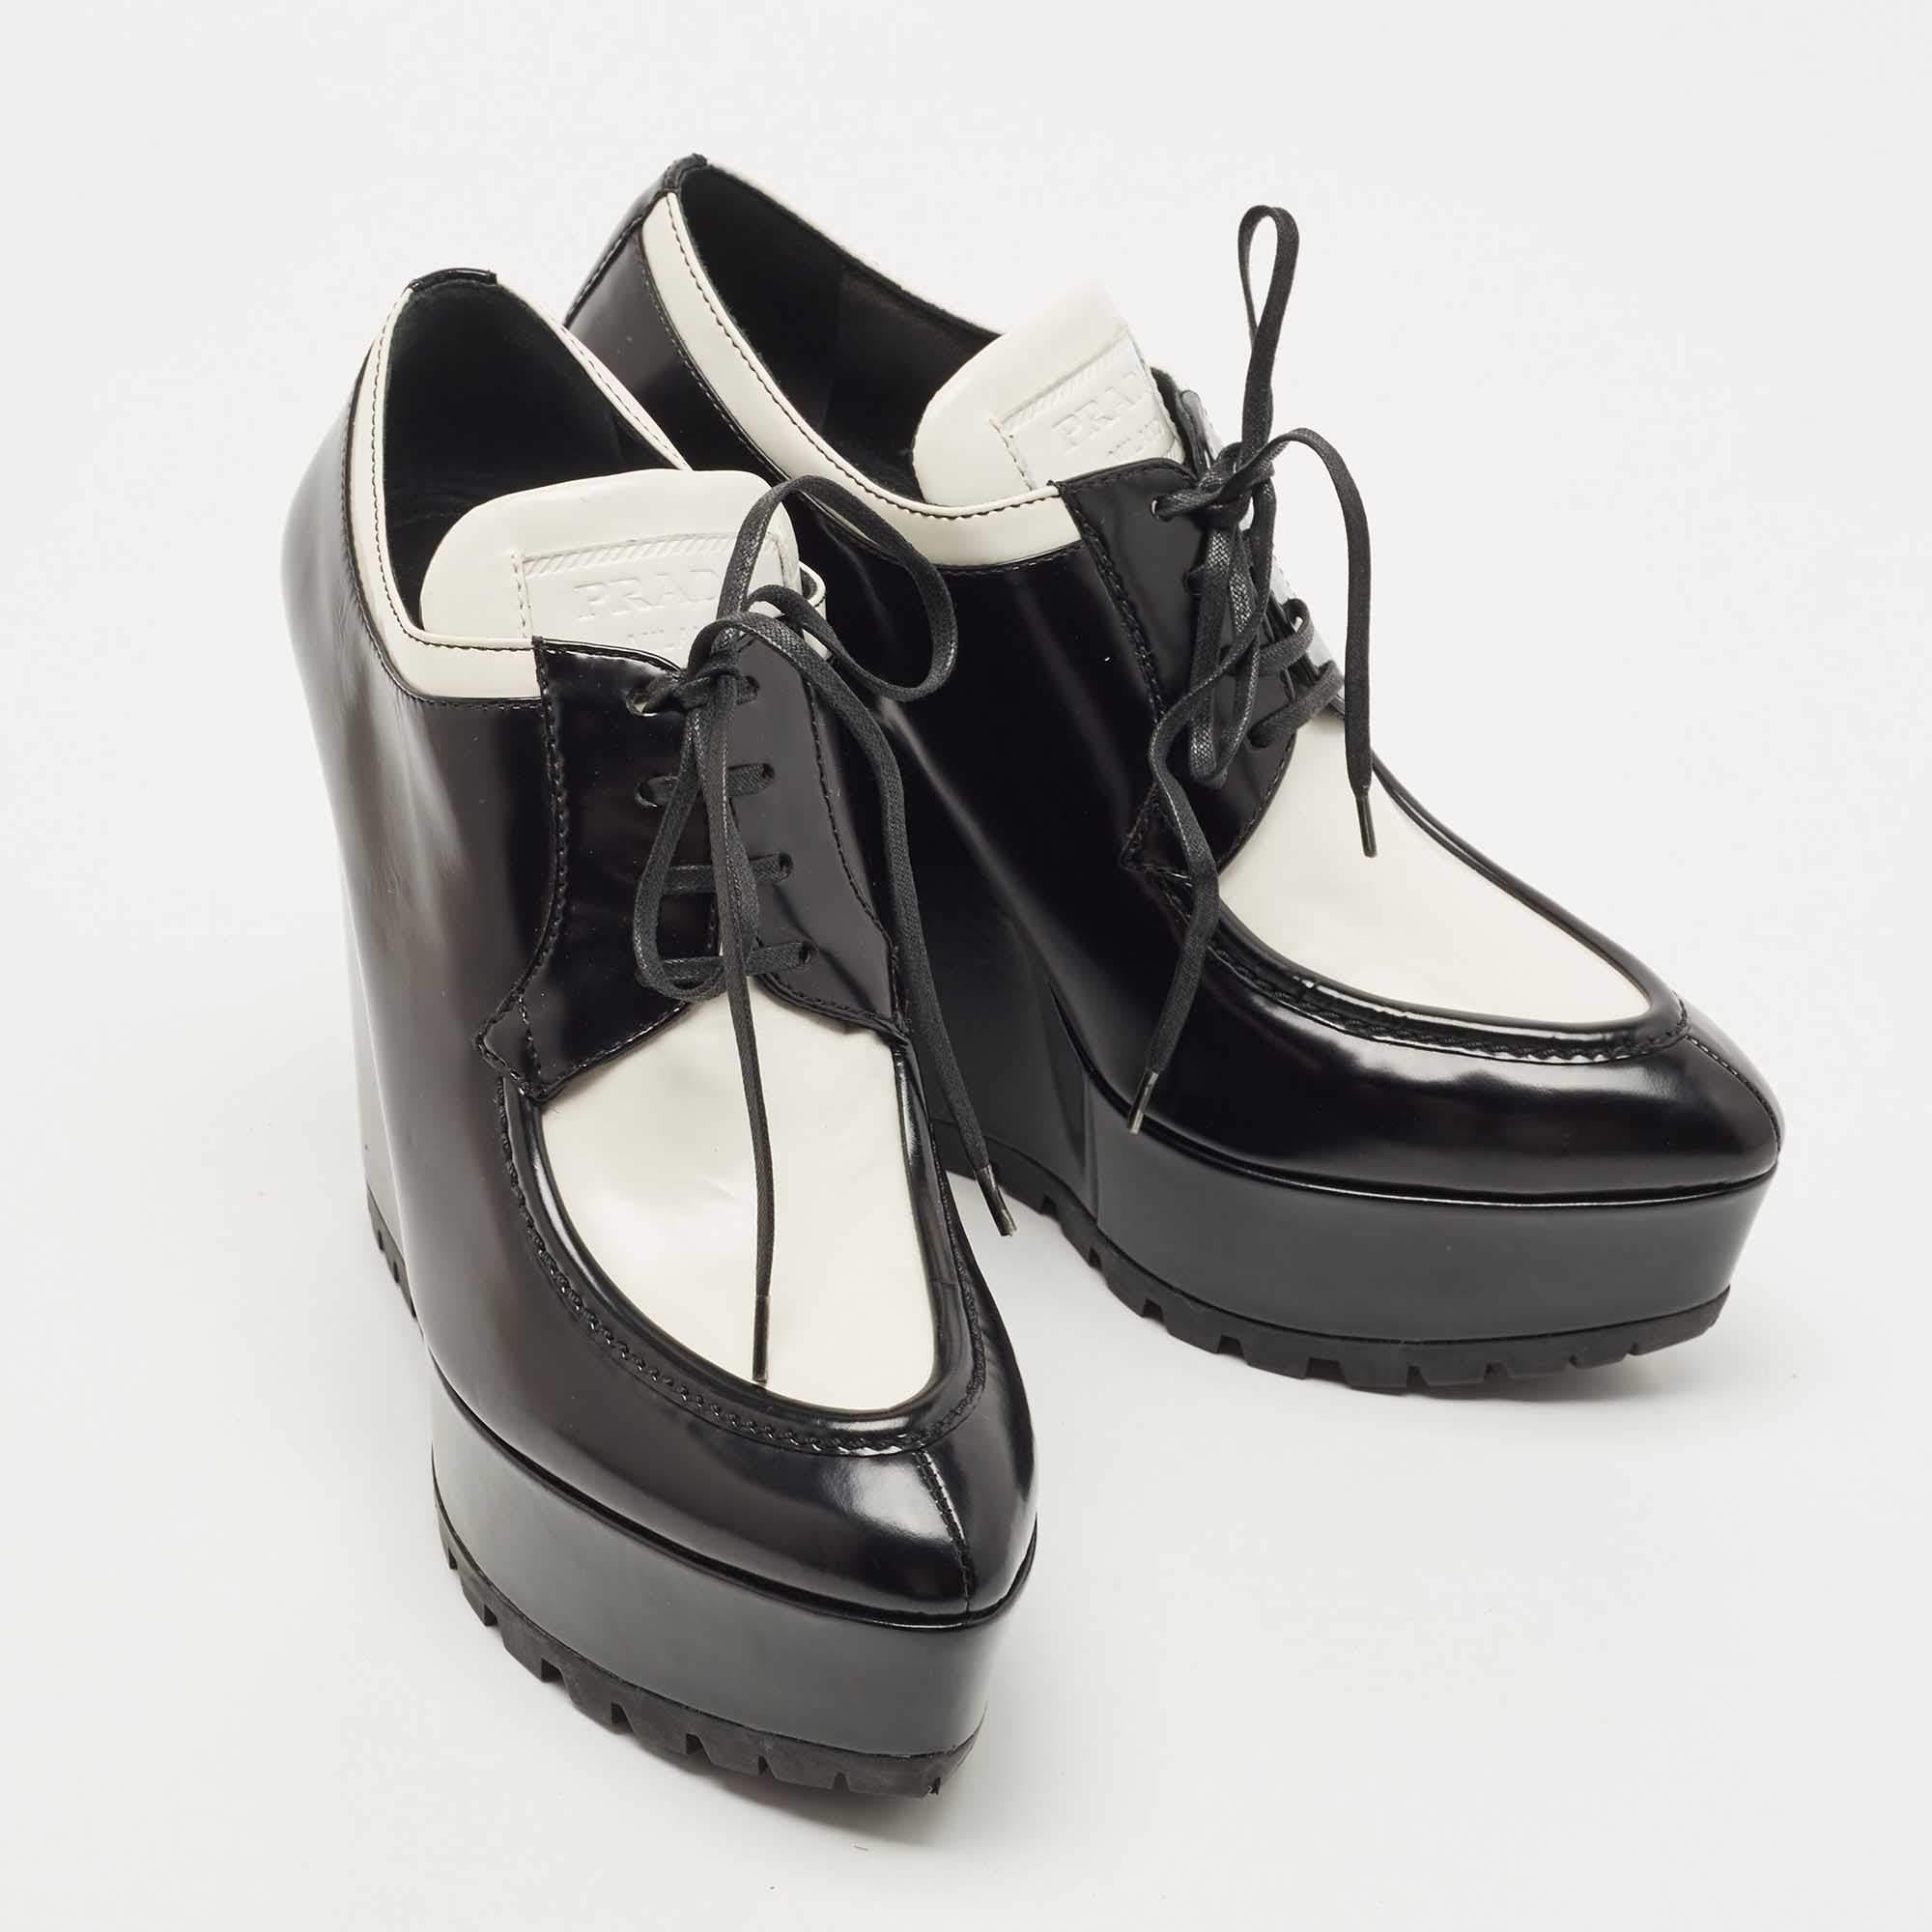 Prada White/Black Leather Platform Wedges Lace Up Derby Size 38 1